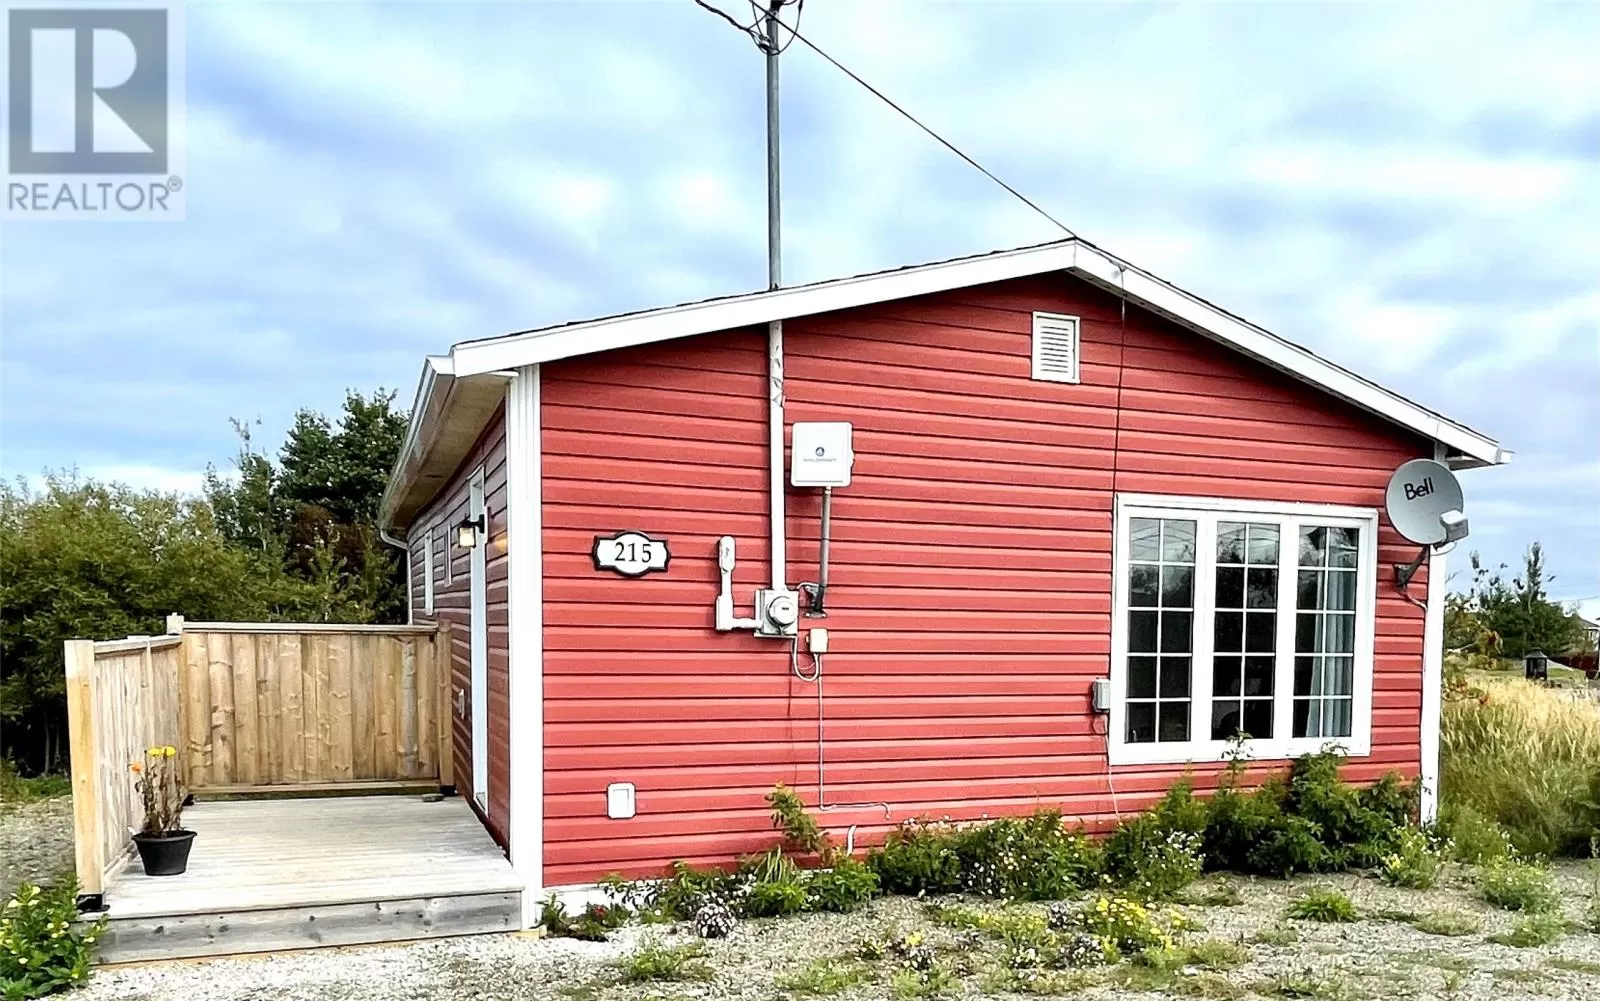 House for rent: 215 Main Street, Musgrave Harbour, Newfoundland & Labrador A0G 3J0